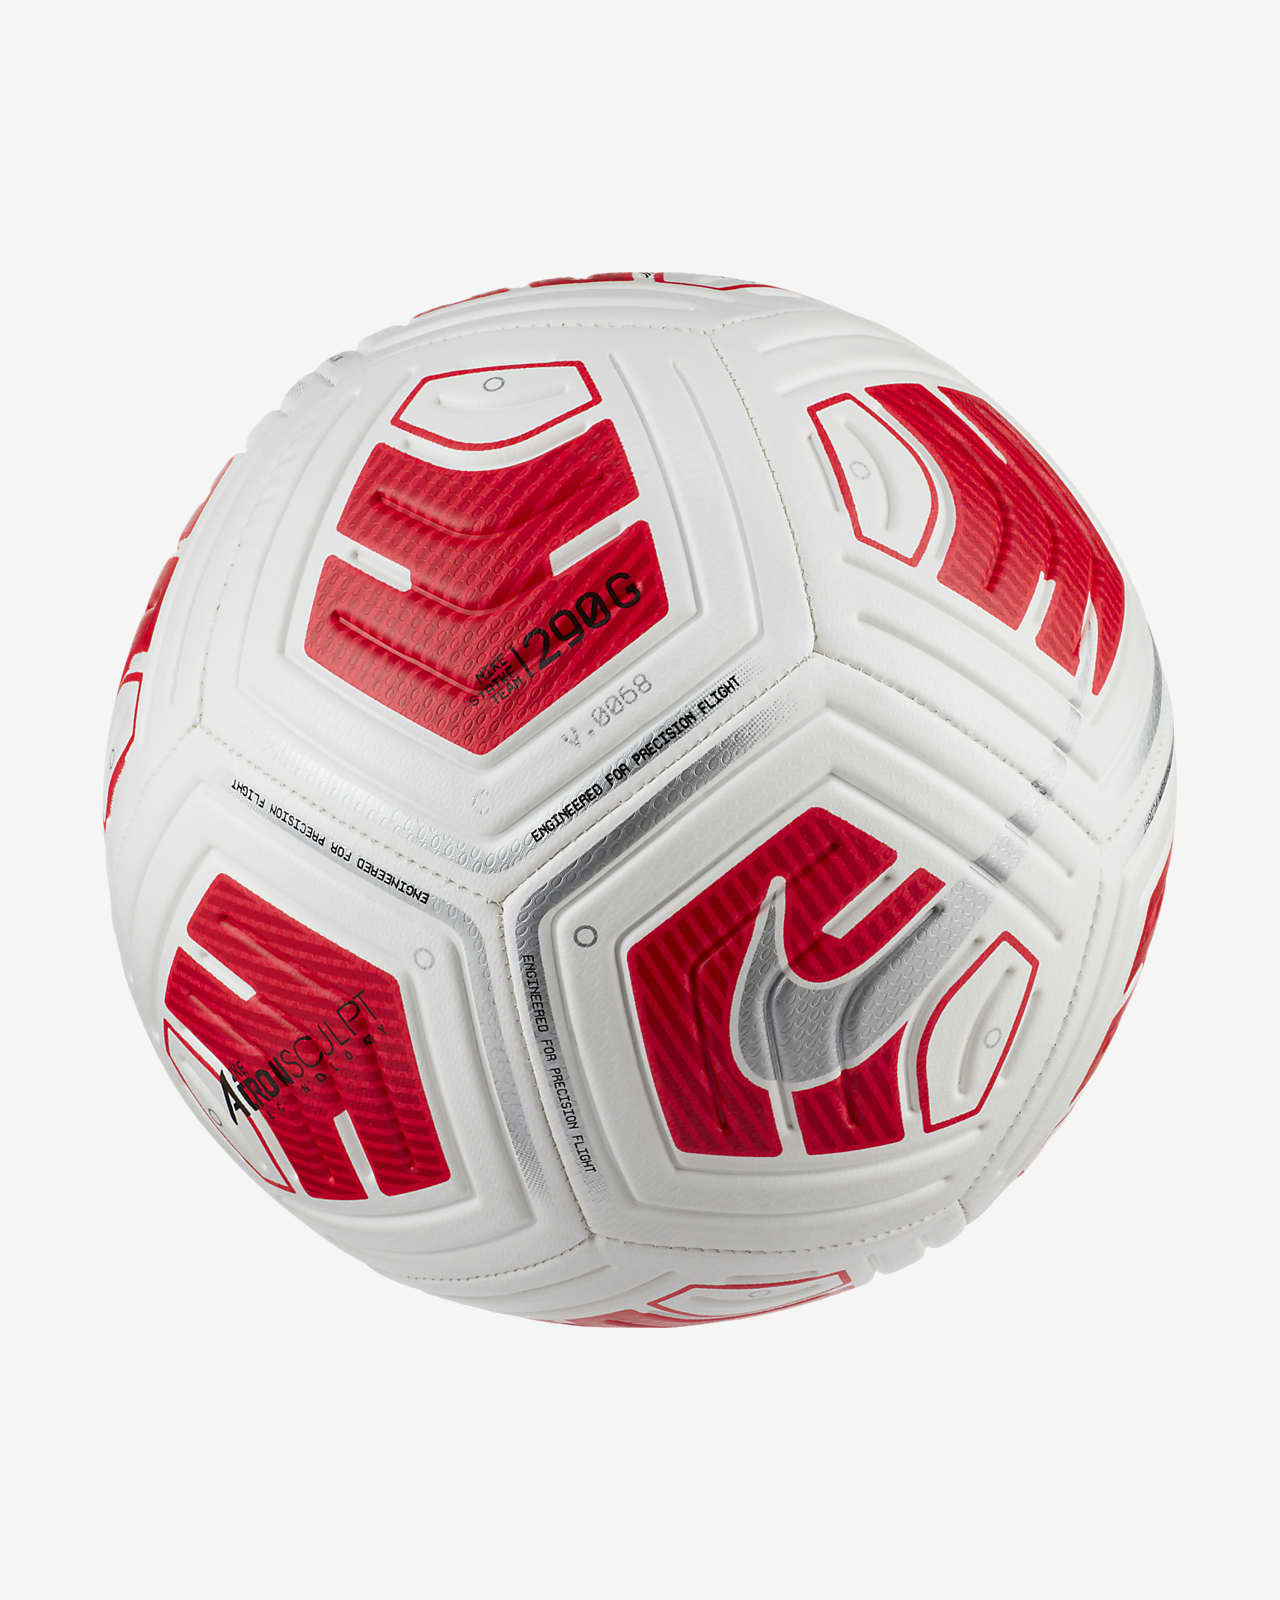 Nike Strike Team futball-labda (290 gramm)